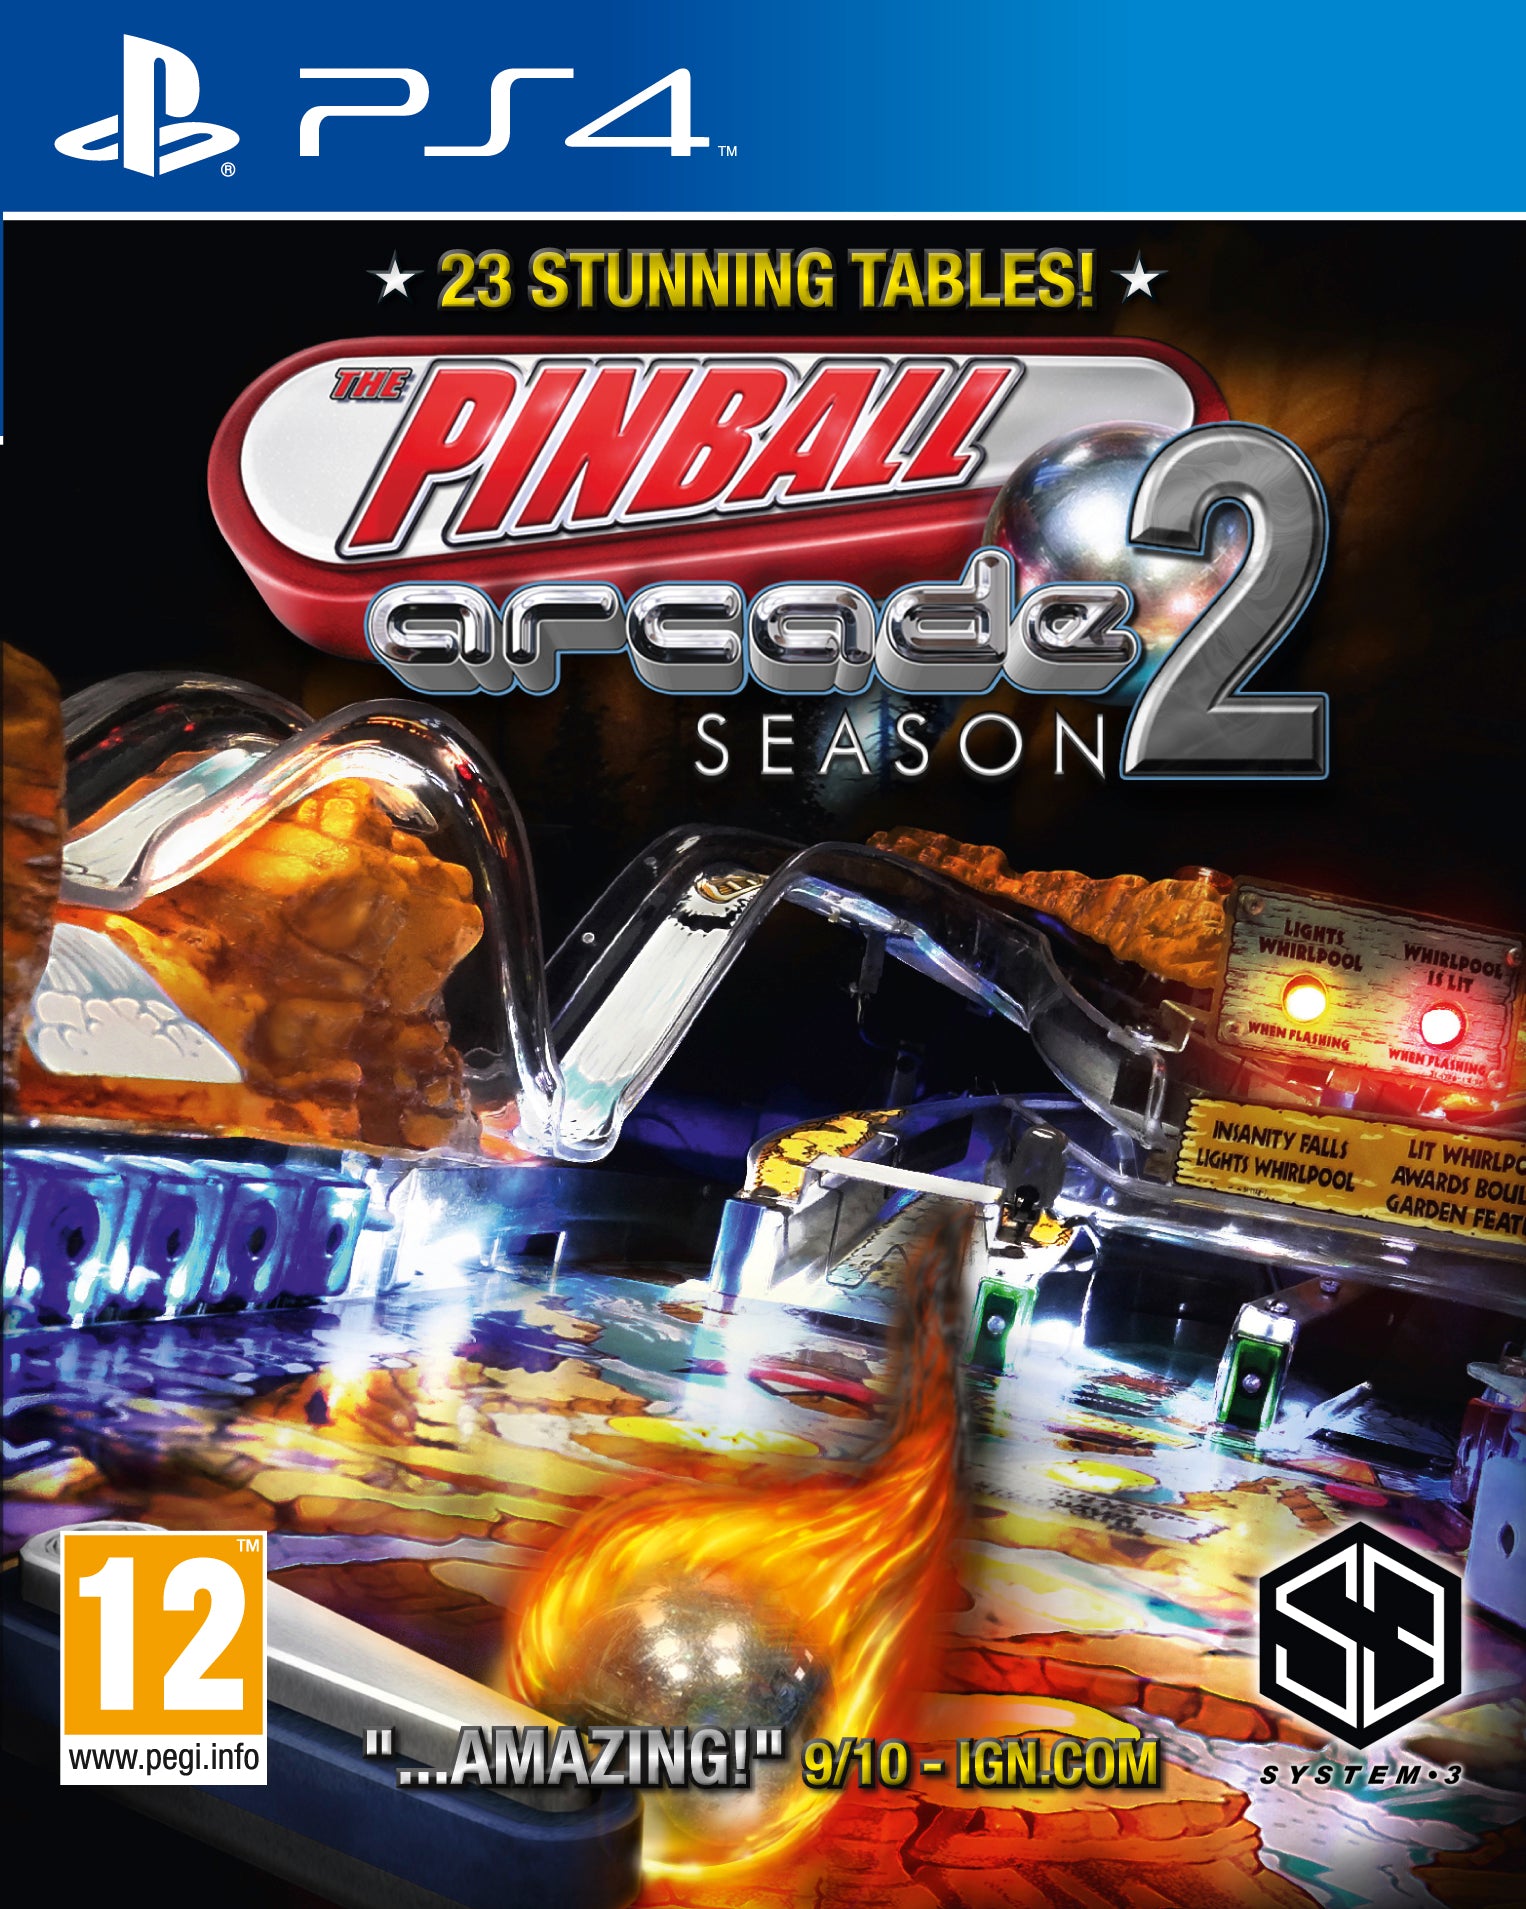 Pinball Arcade Season 2 - PS4